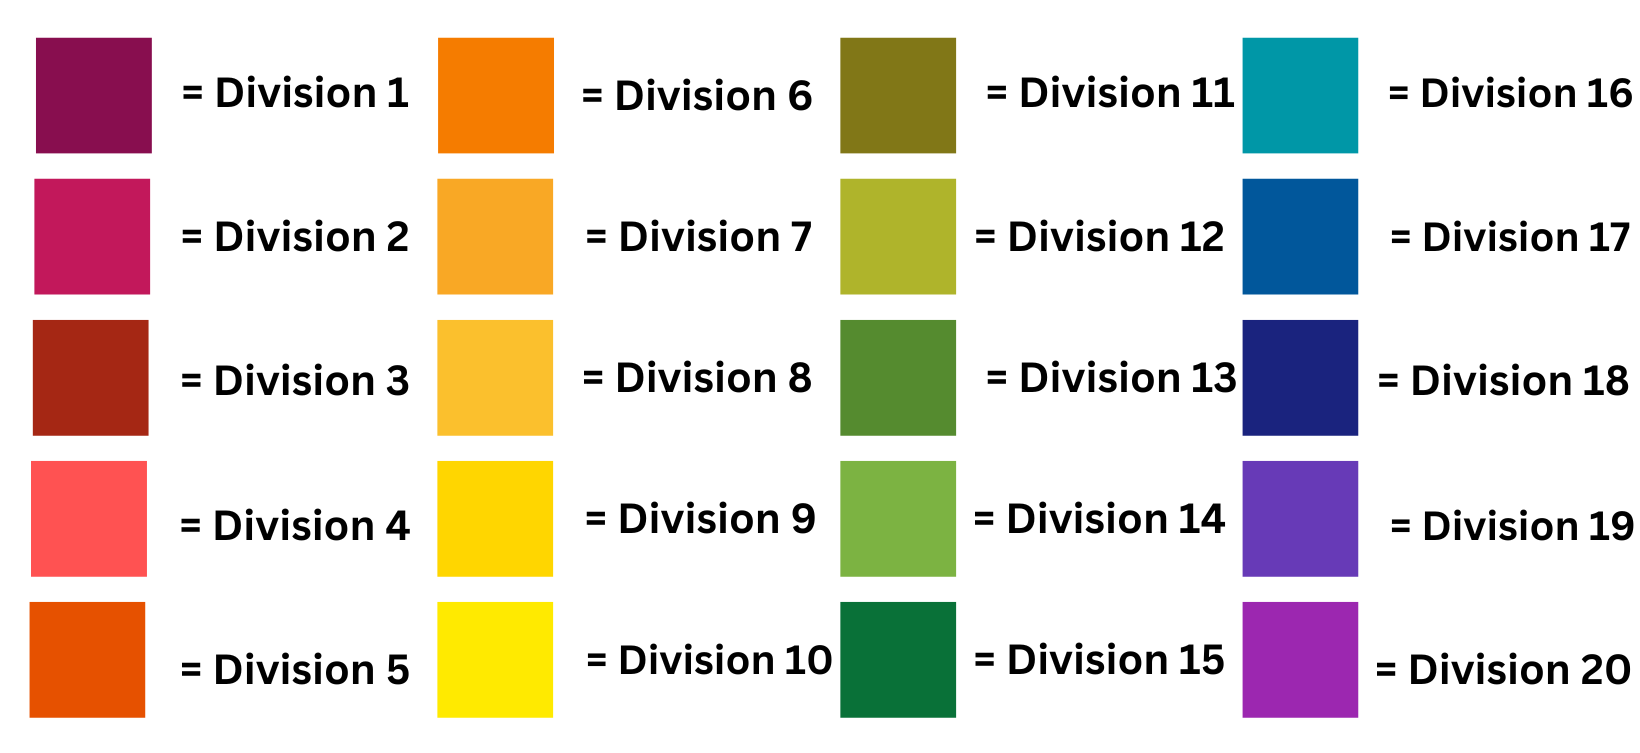 = Division 1